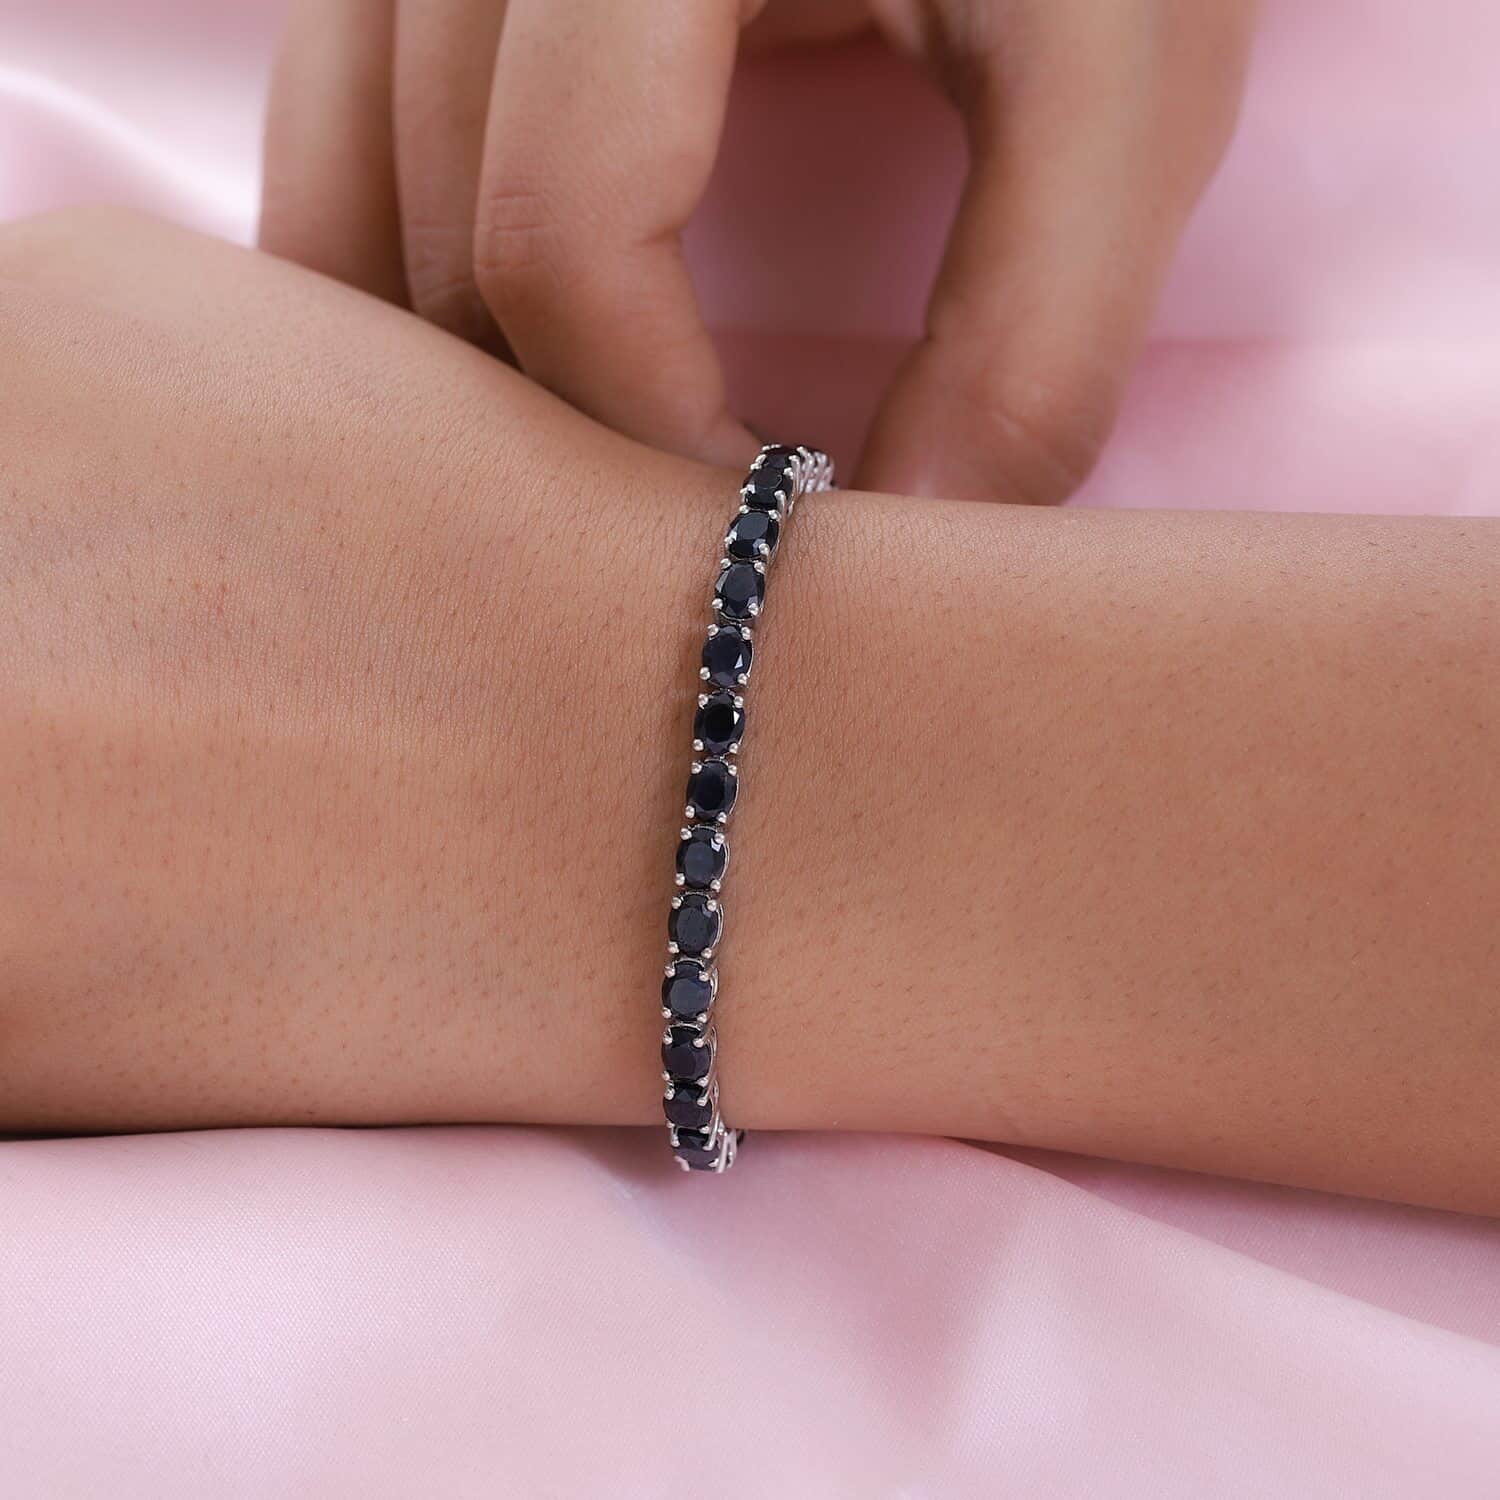 Black sapphire and silver bracelet - TigerLily Jewellery